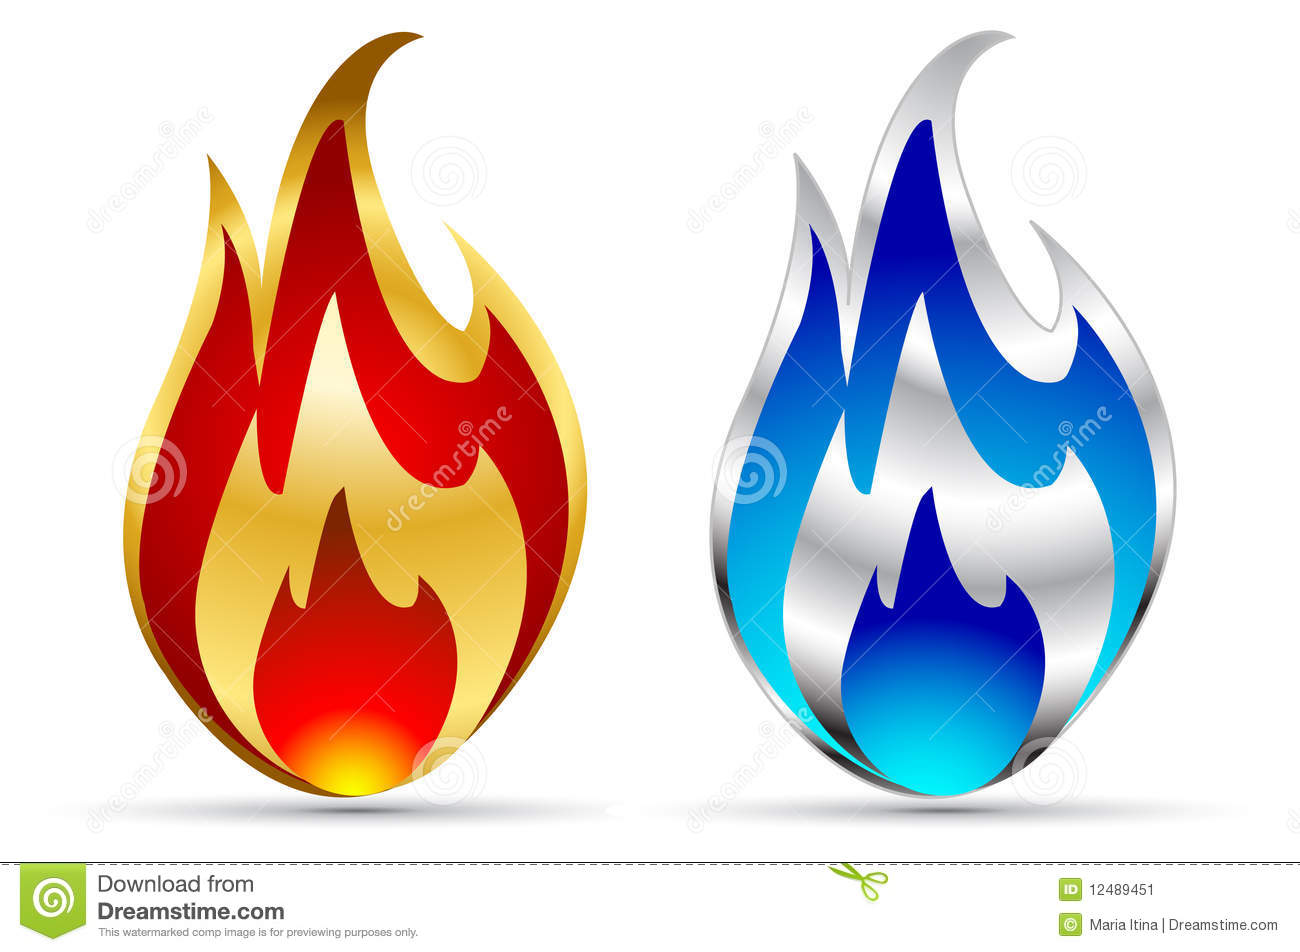 Blue Flame Gas Heaters and Carbon Monoxide